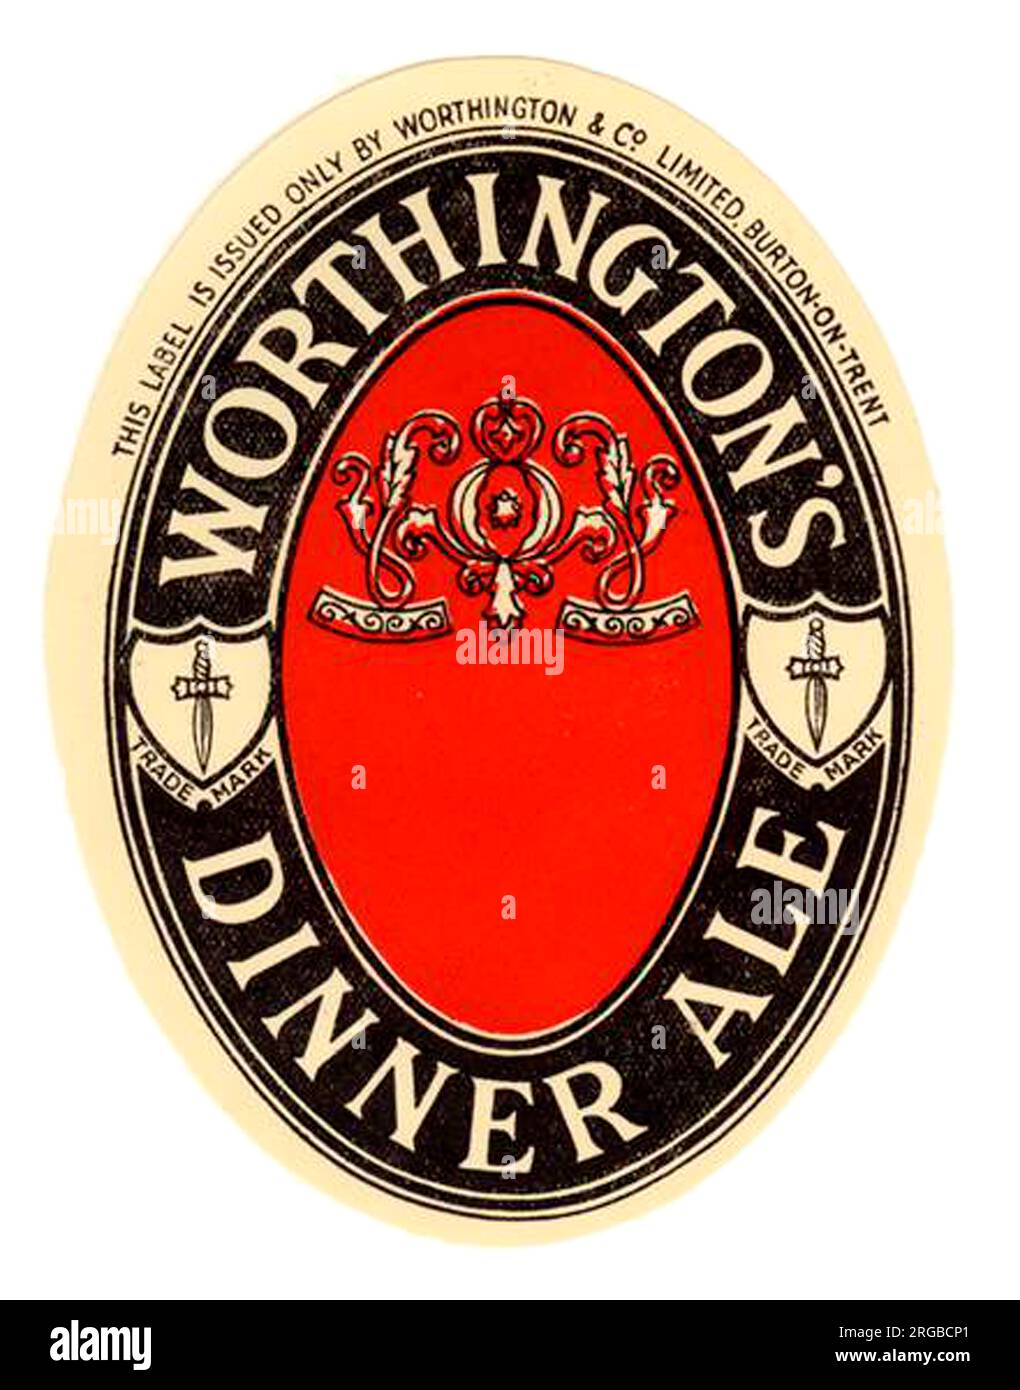 Worthington's Dinner Ale Stock Photo